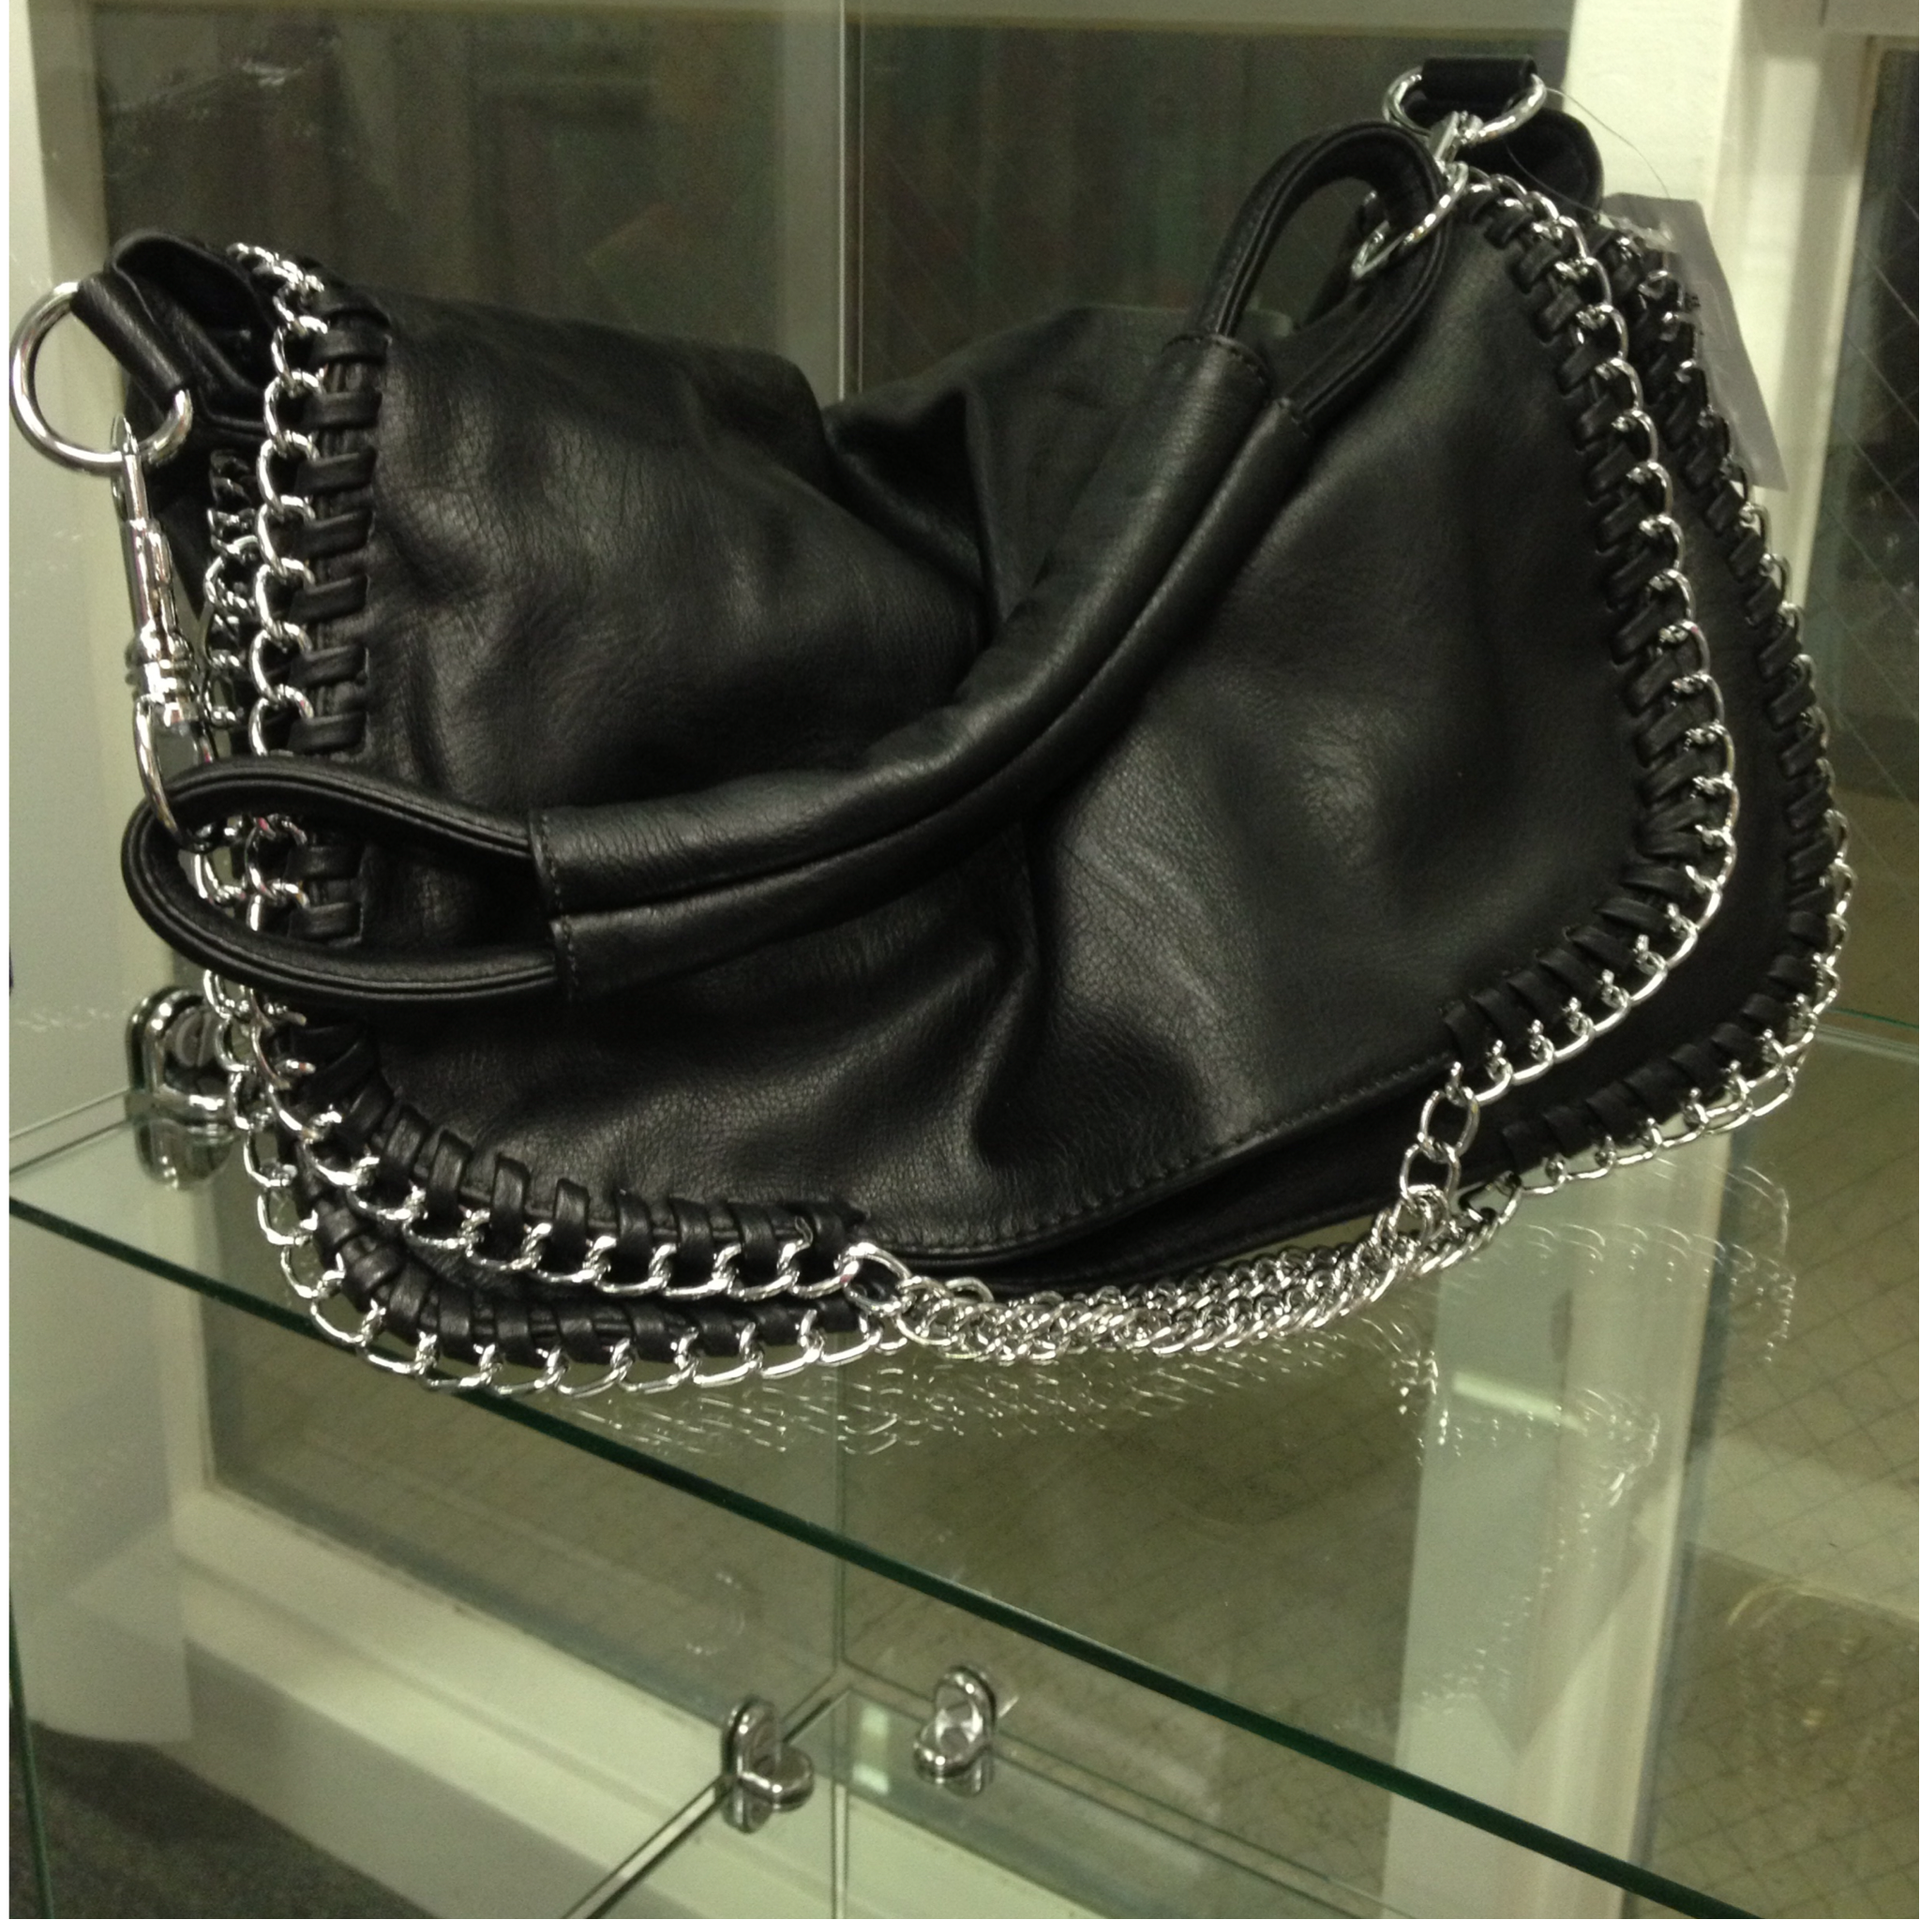 Black Leather Handbag with Silver Chain Trim $65